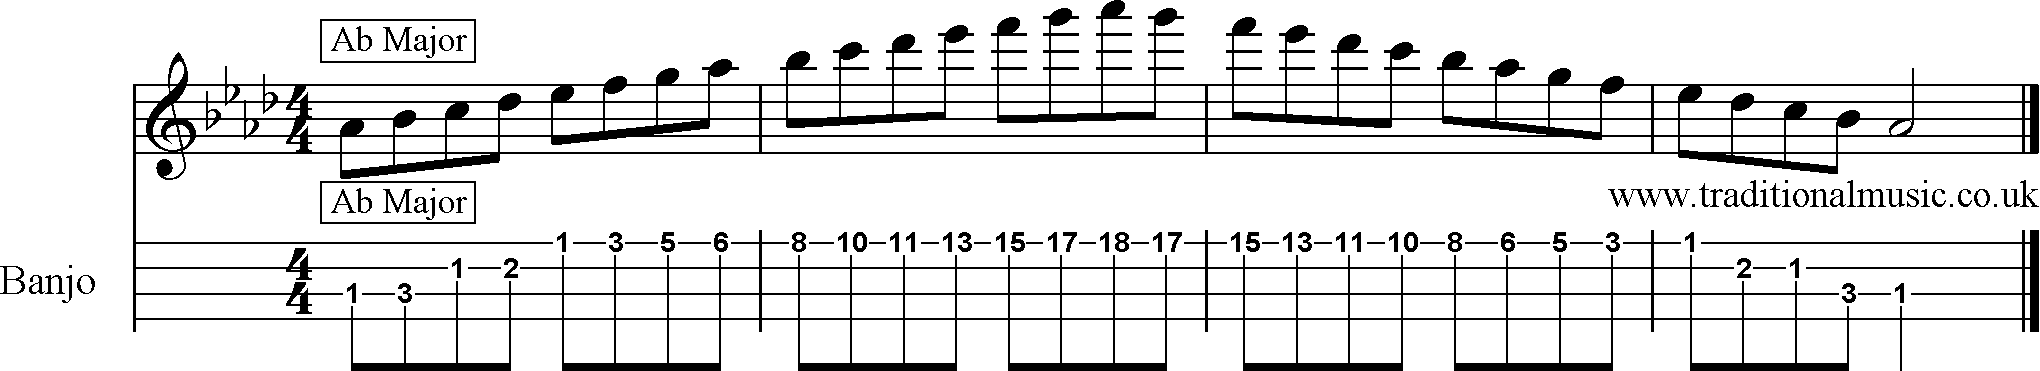 Major Scales for Banjo Ab